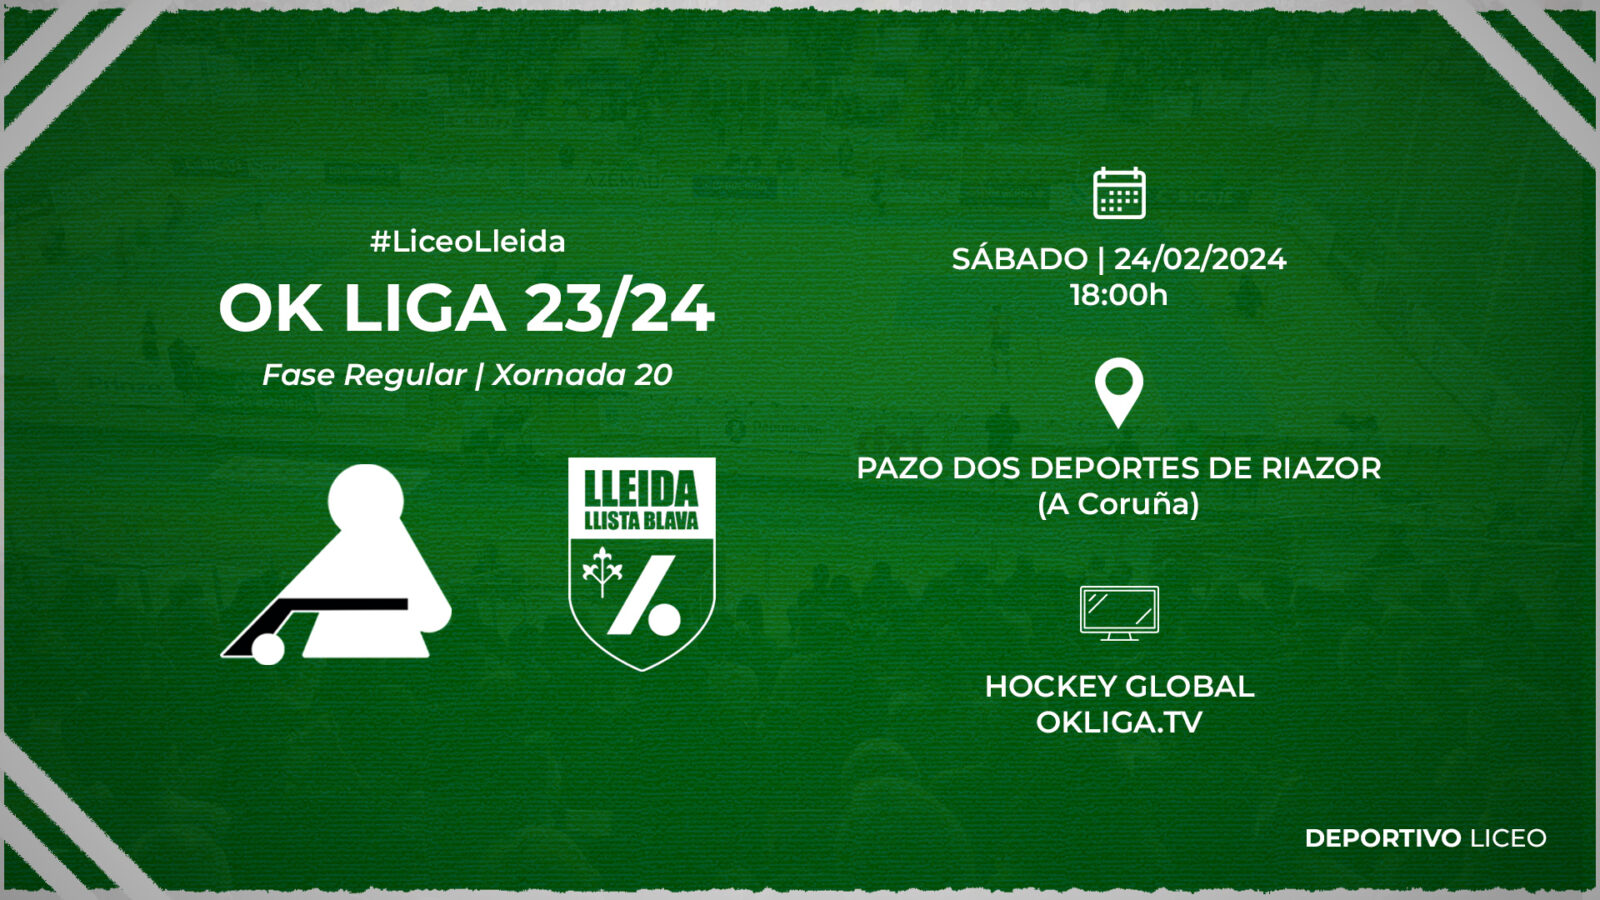 #LiceoLleida | ENTRADAS para la jornada 20 de la OK Liga 23/24